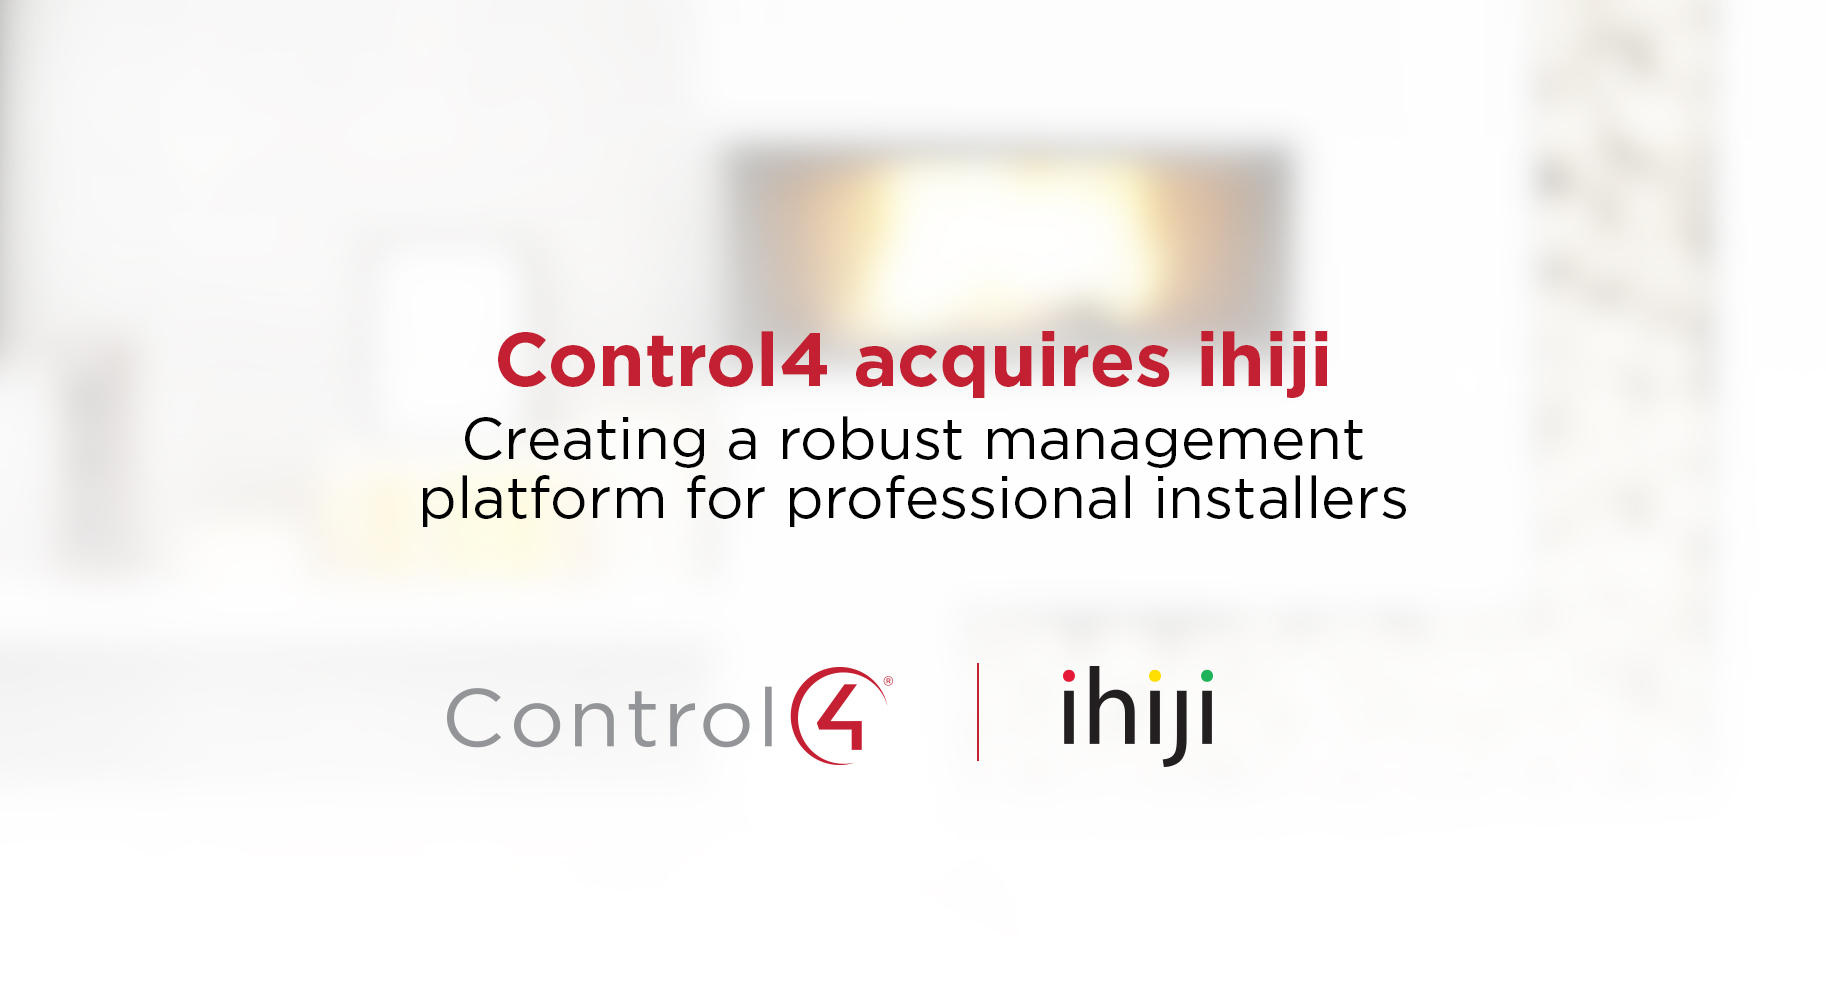 Control4 Acquires Ihiji: news, 